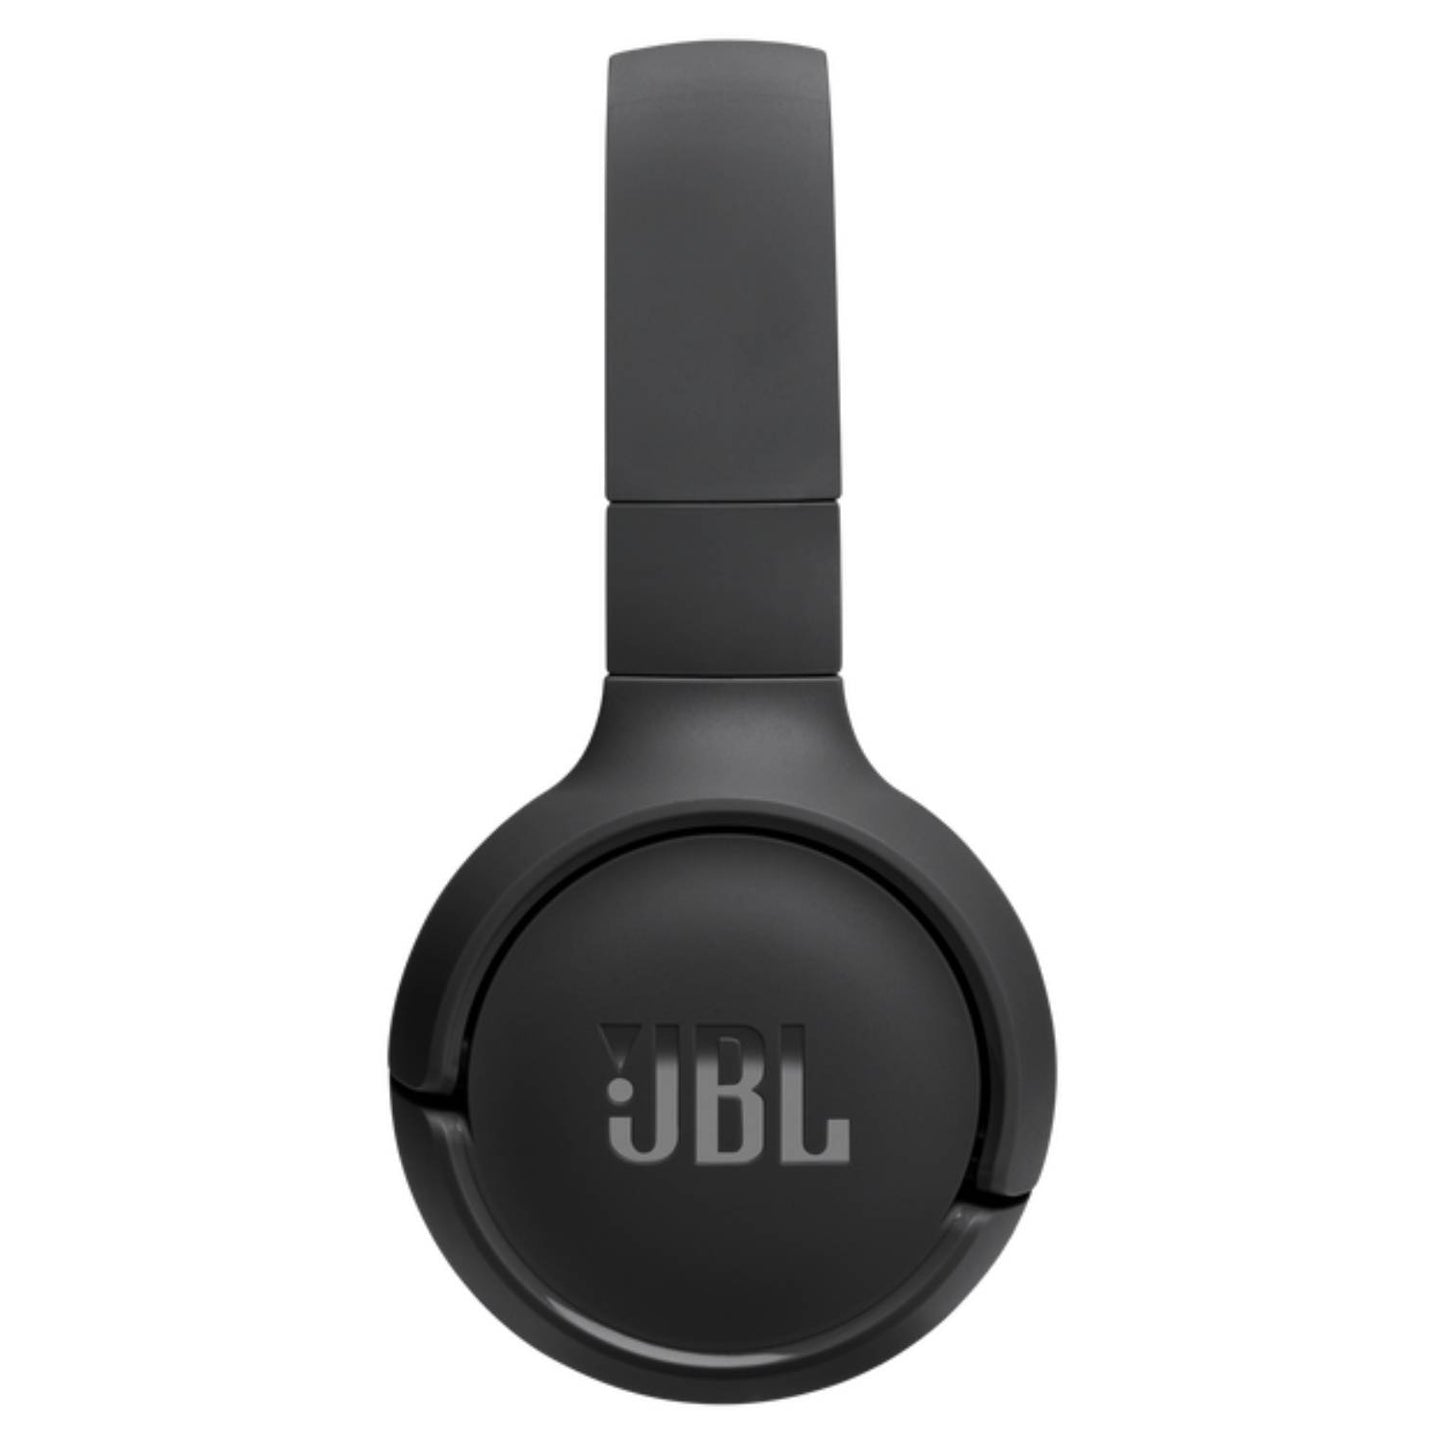 Audifonos Bluetooth JBL 5.3 Pure Bass Sound Tune 520BT Negro